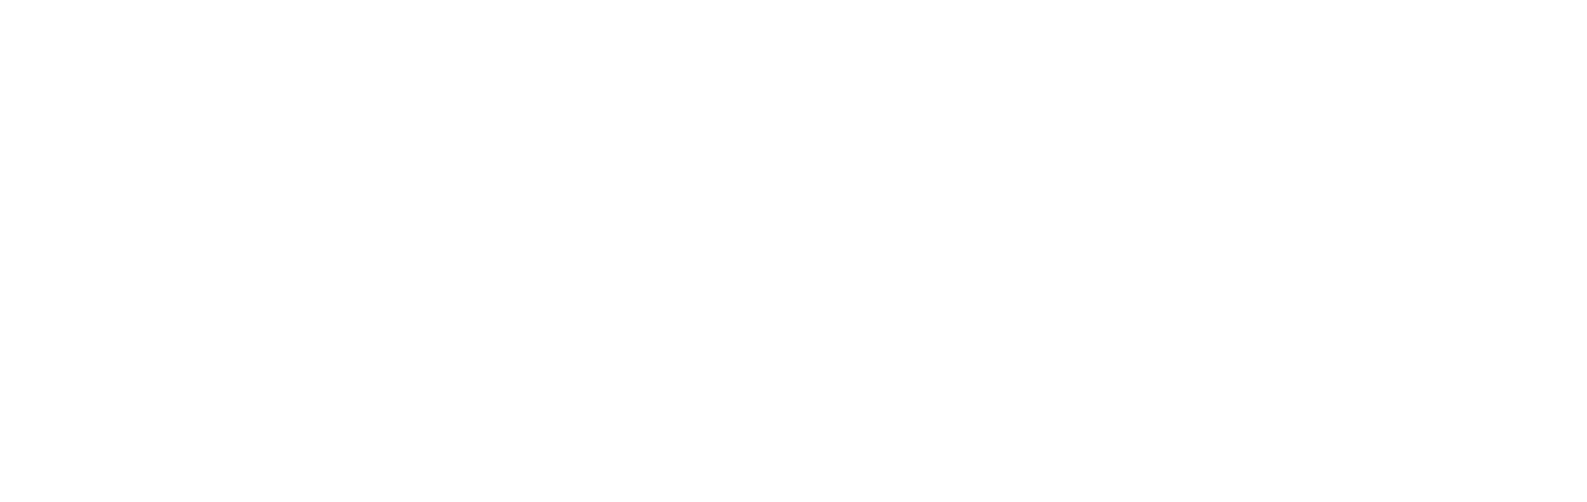 African Rainbow Minerals logo grand pour les fonds sombres (PNG transparent)